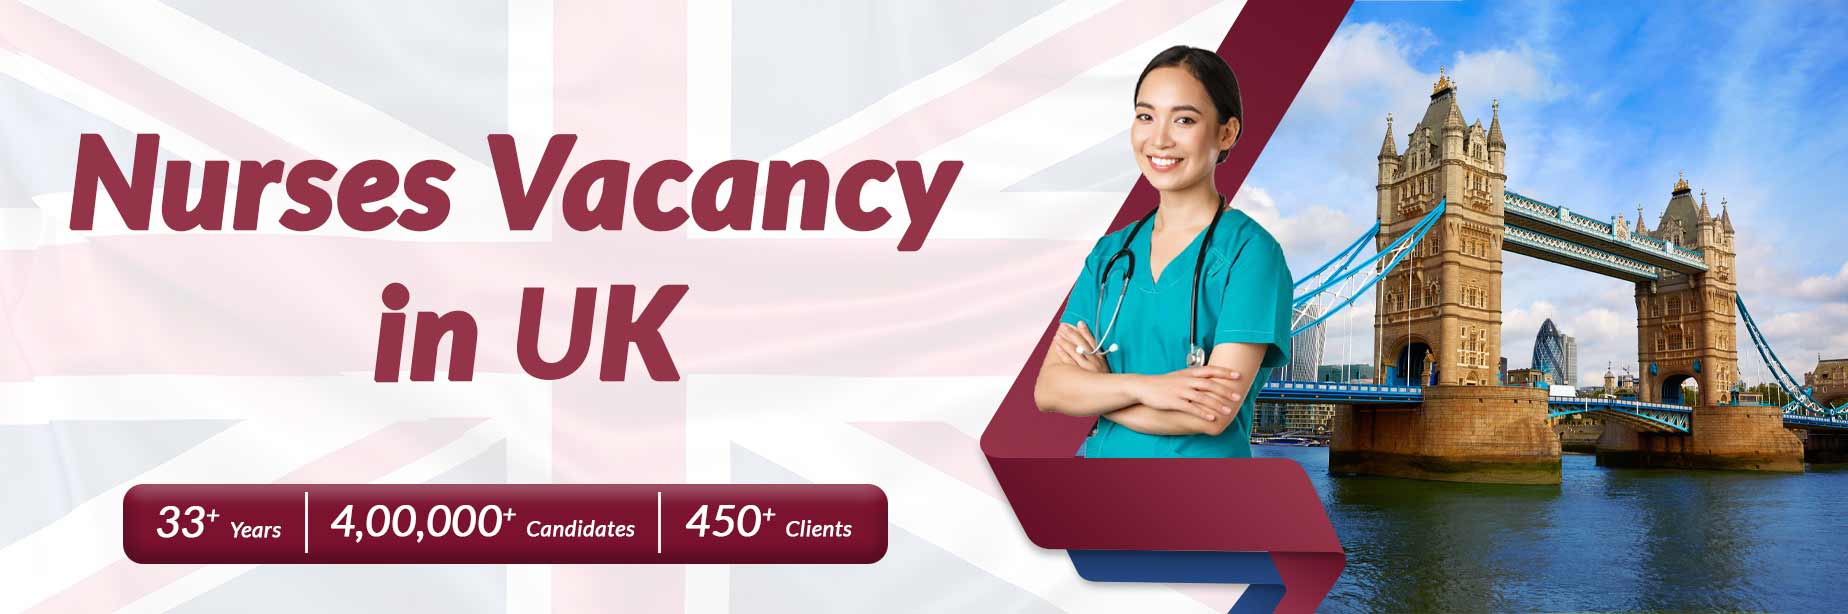 Nurses Vacancy in UK